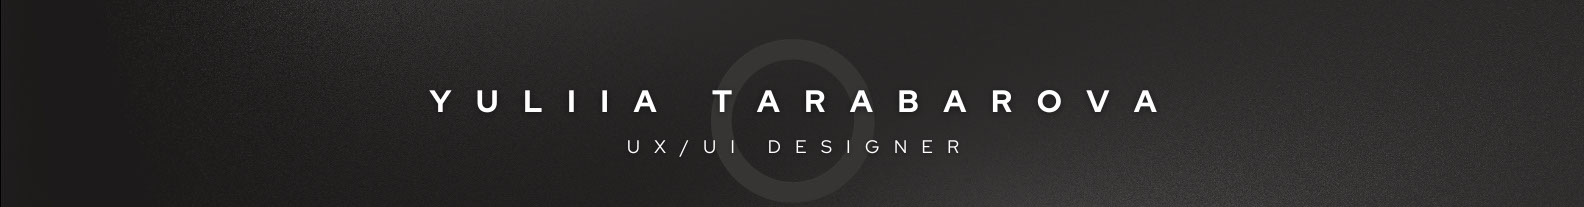 Profil-Banner von Yuliia Tarabarova